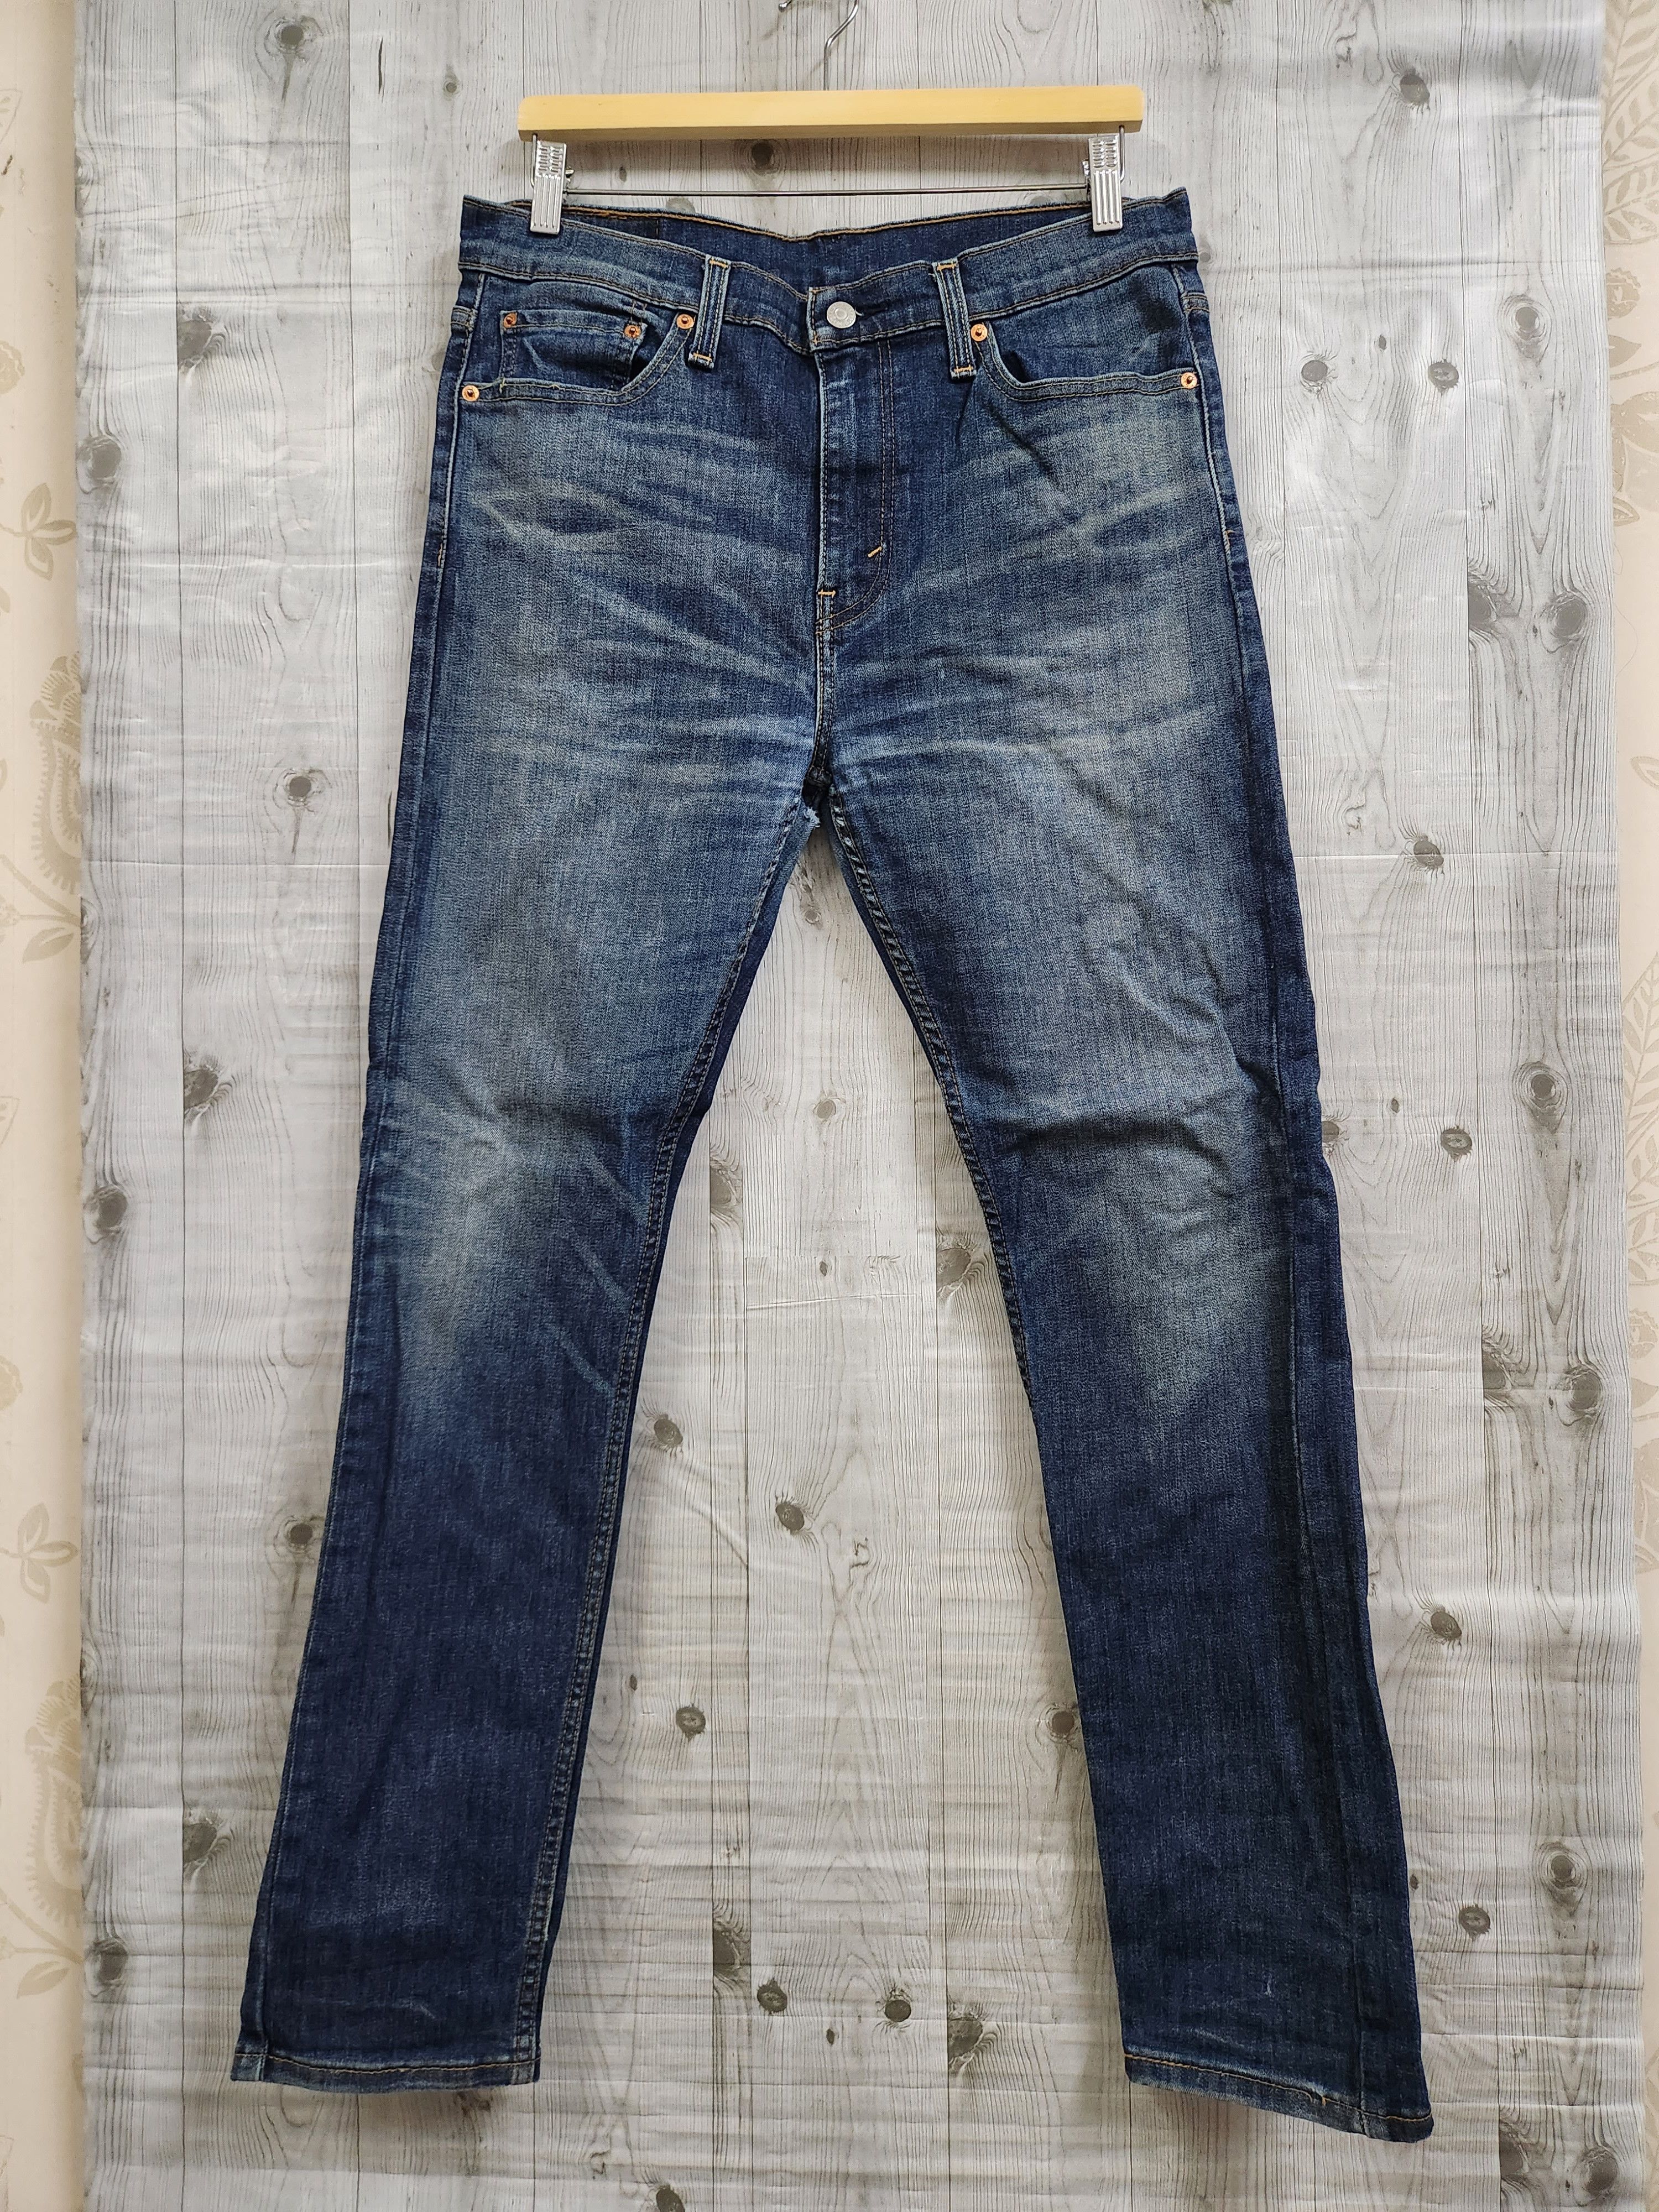 Levi's 510 Blue Denim Jeans - 1